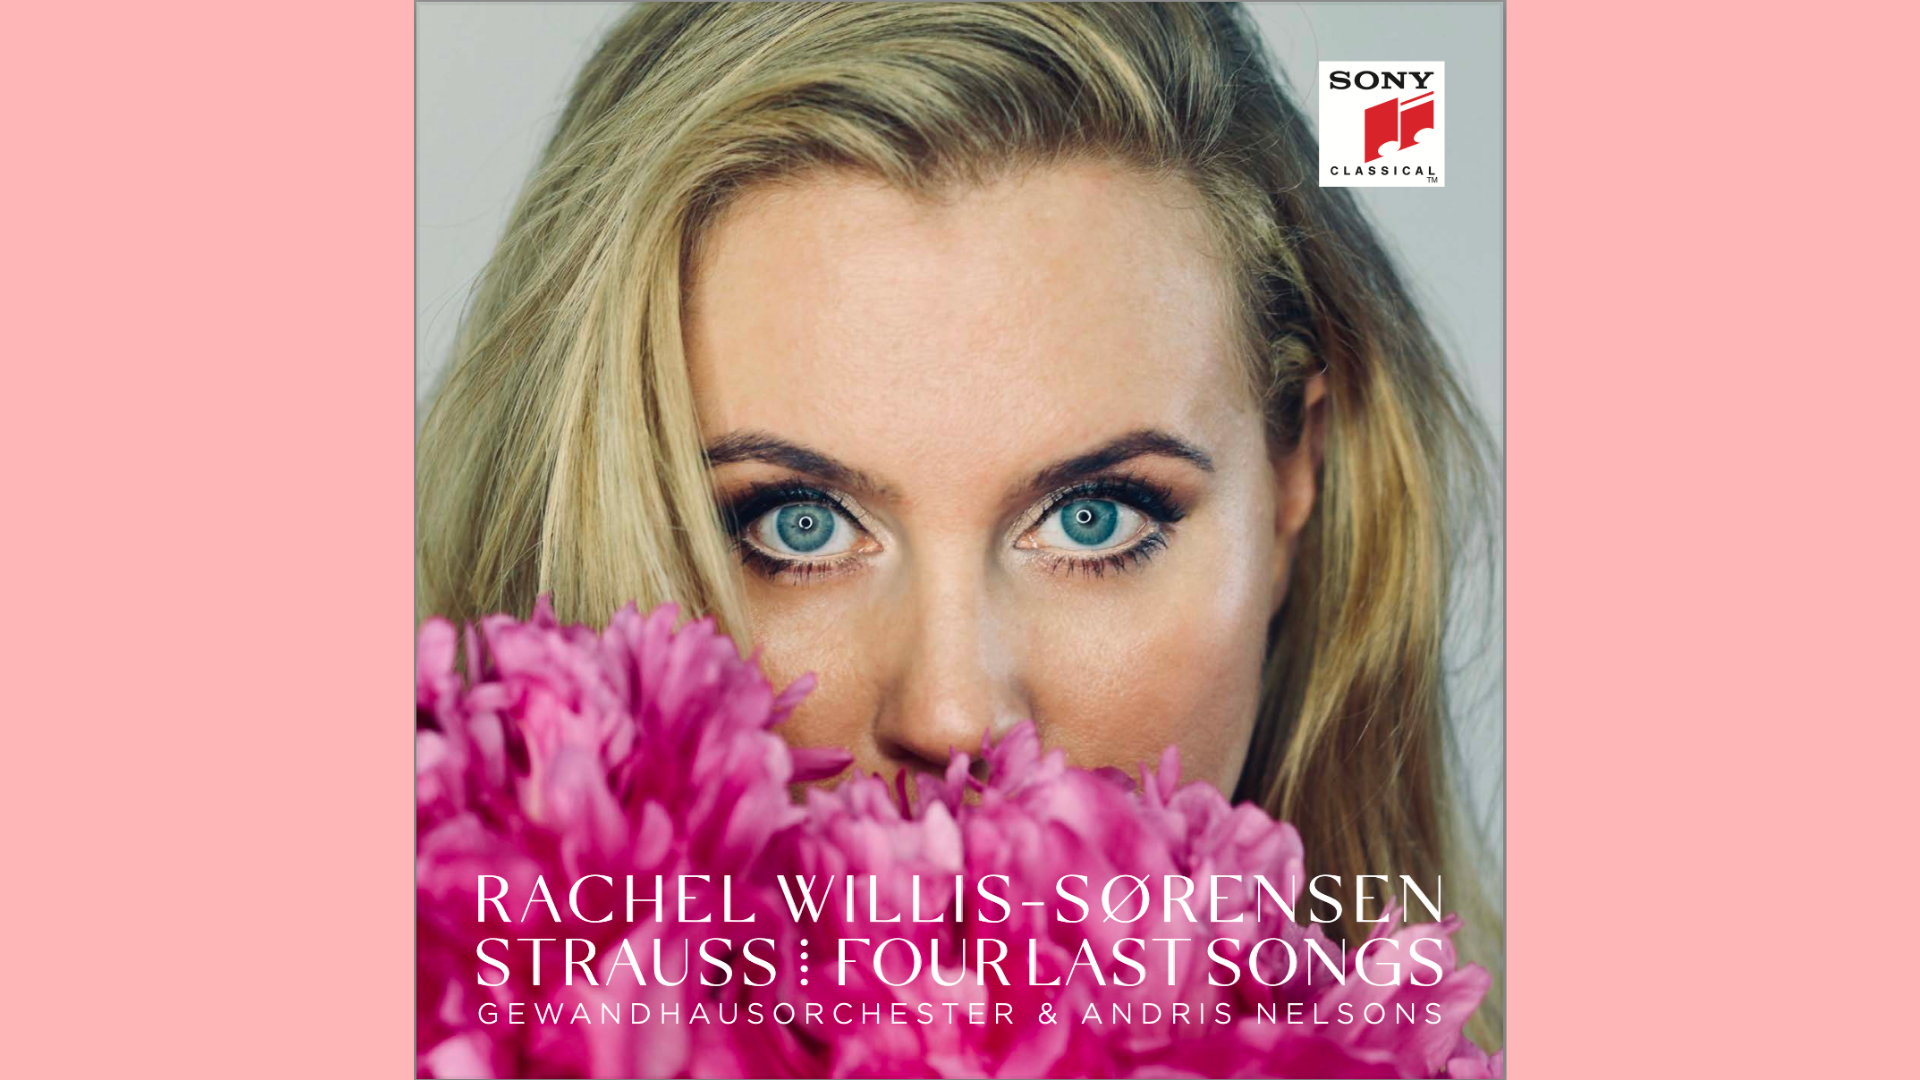 Rachel Willis-Sørensen Strauss